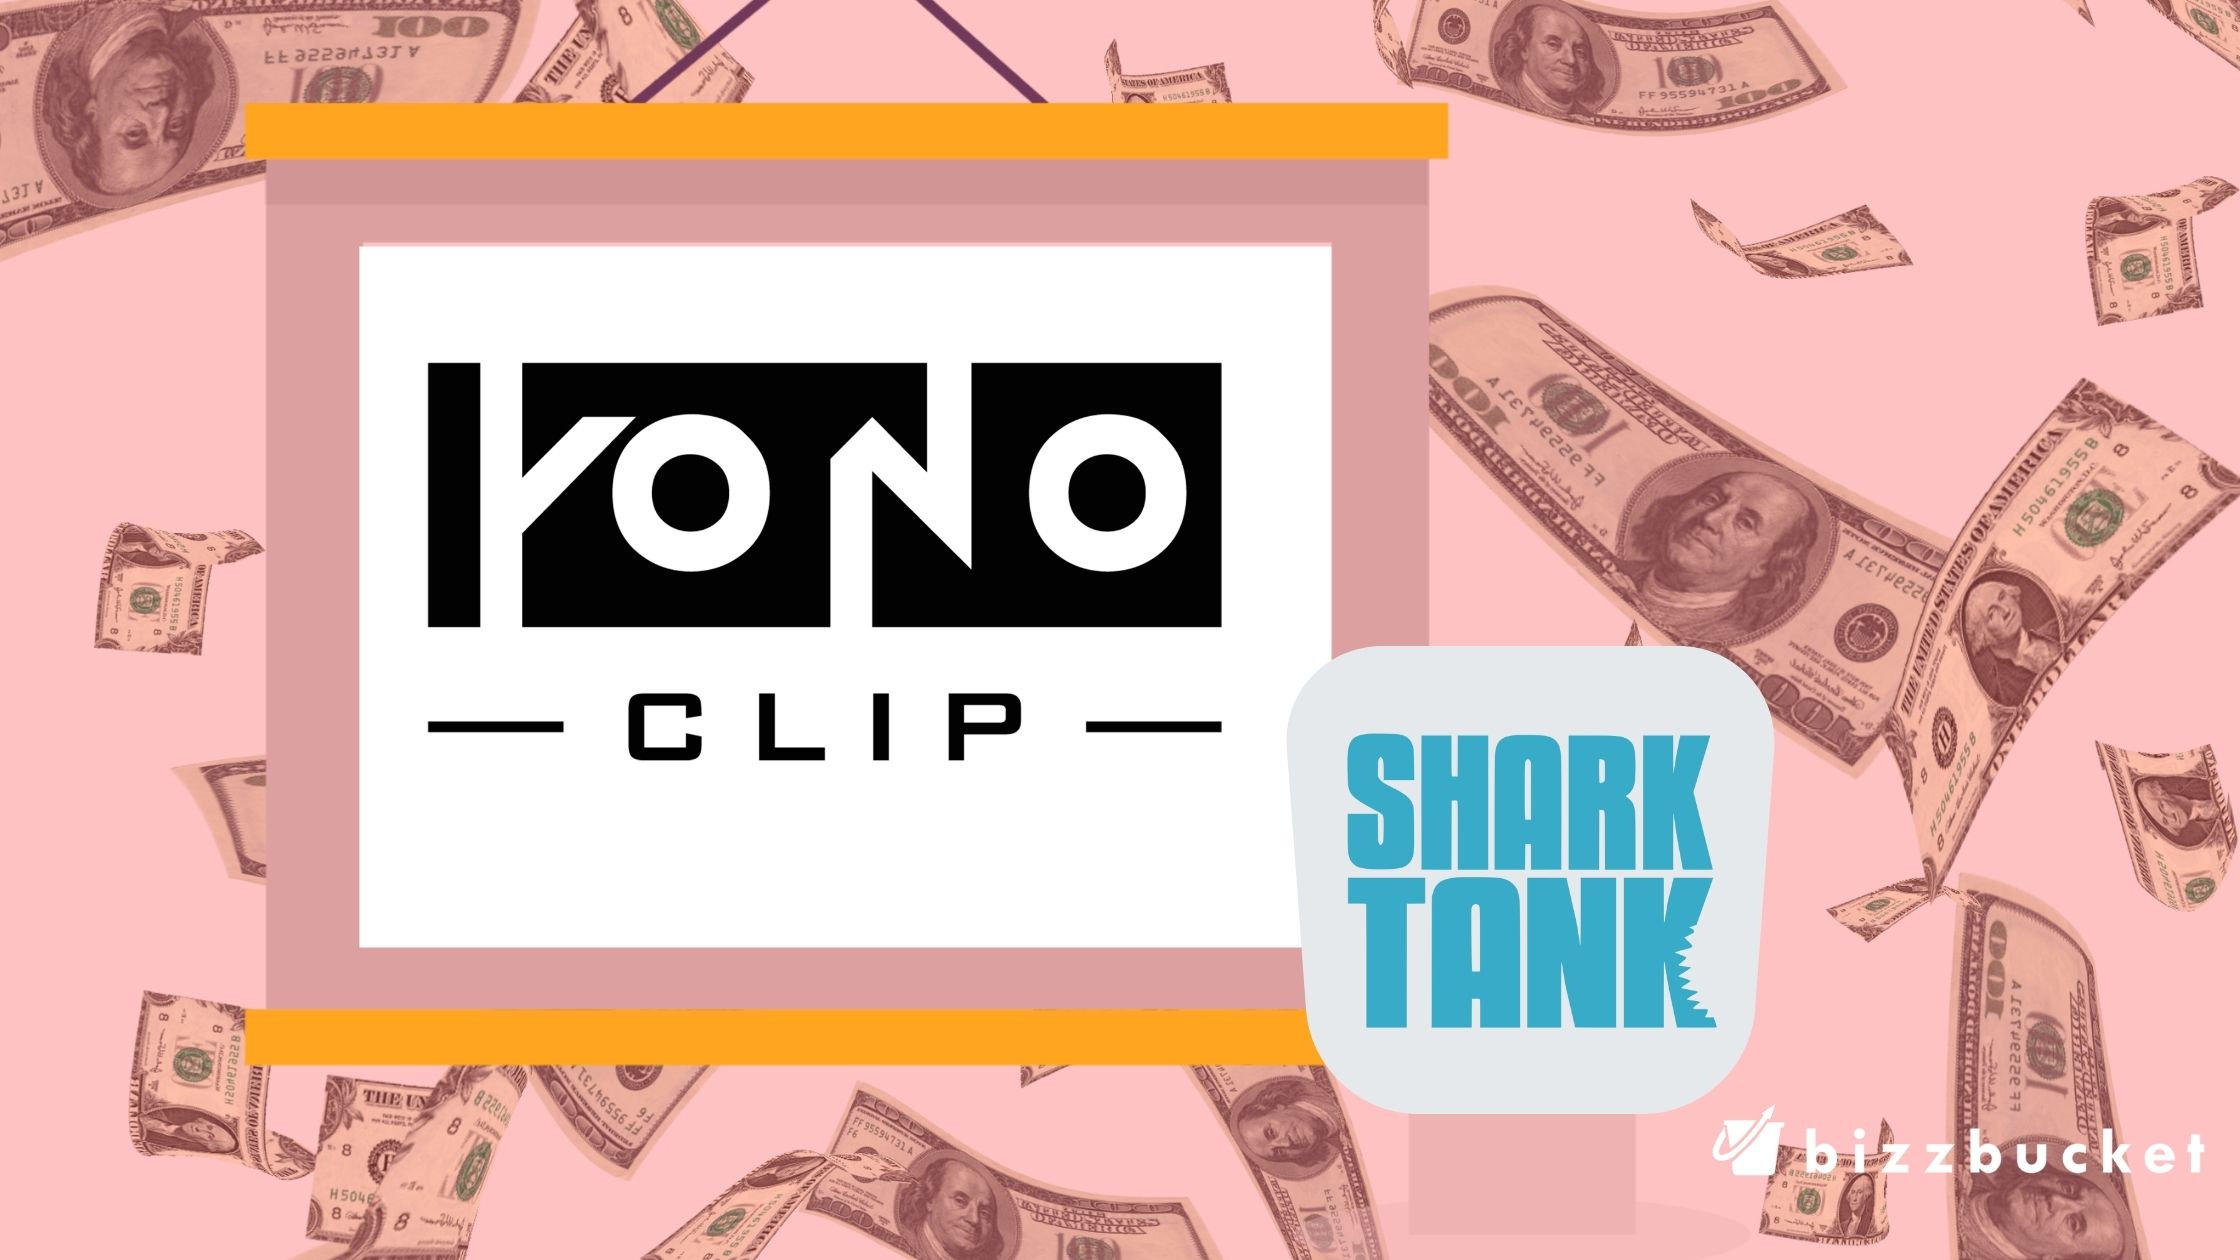 Yono Clip shark tank update